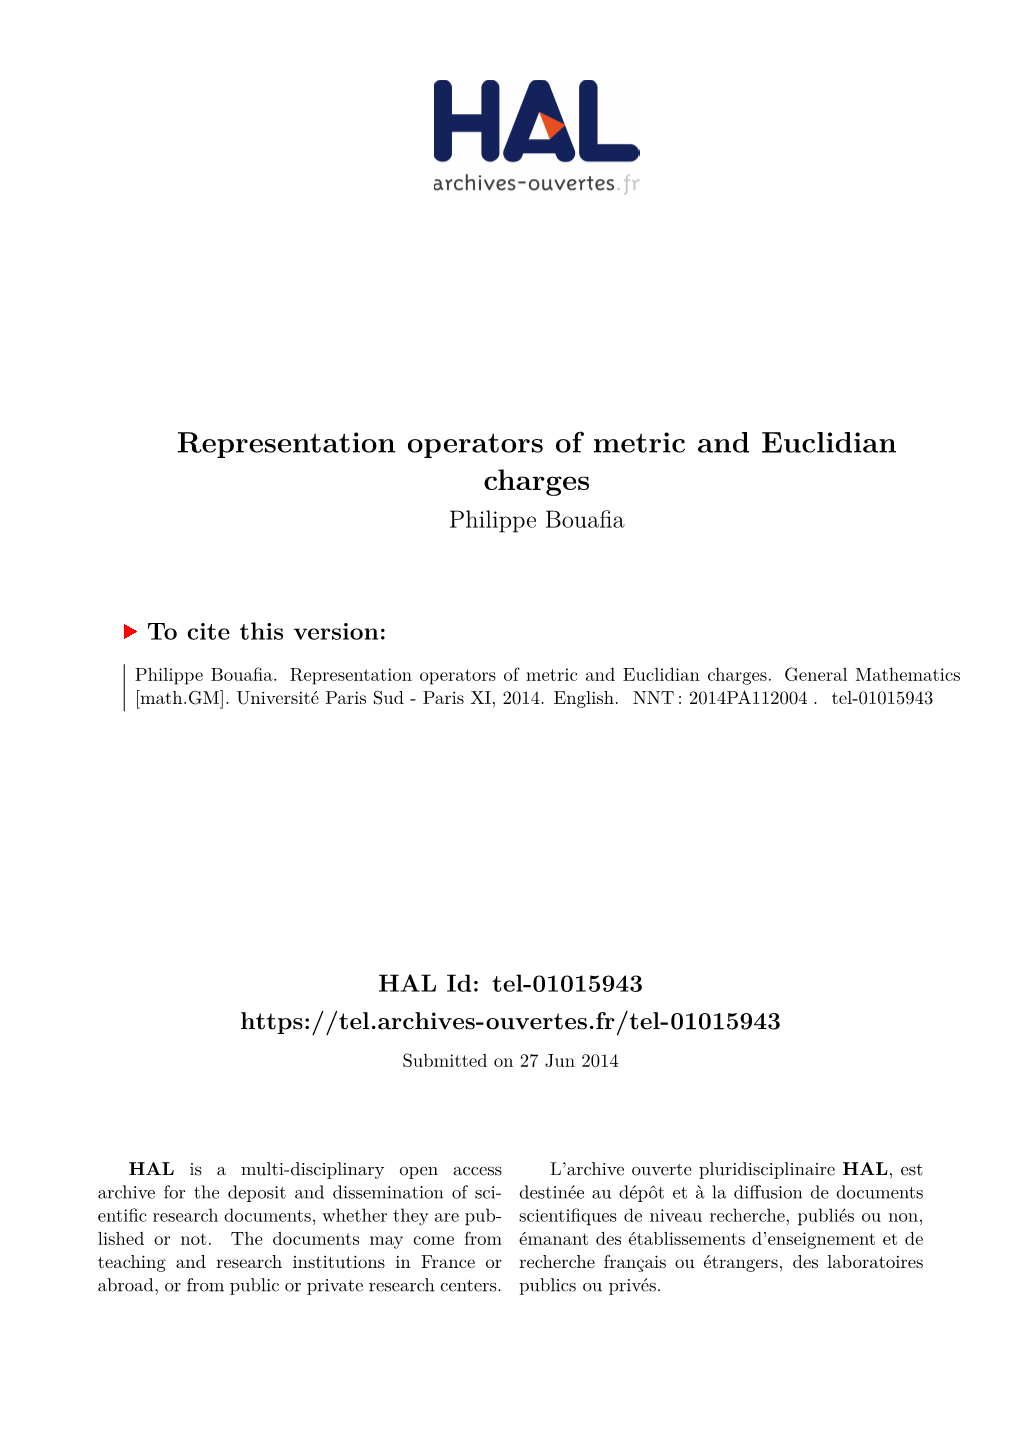 Representation Operators of Metric and Euclidian Charges Philippe Bouafia